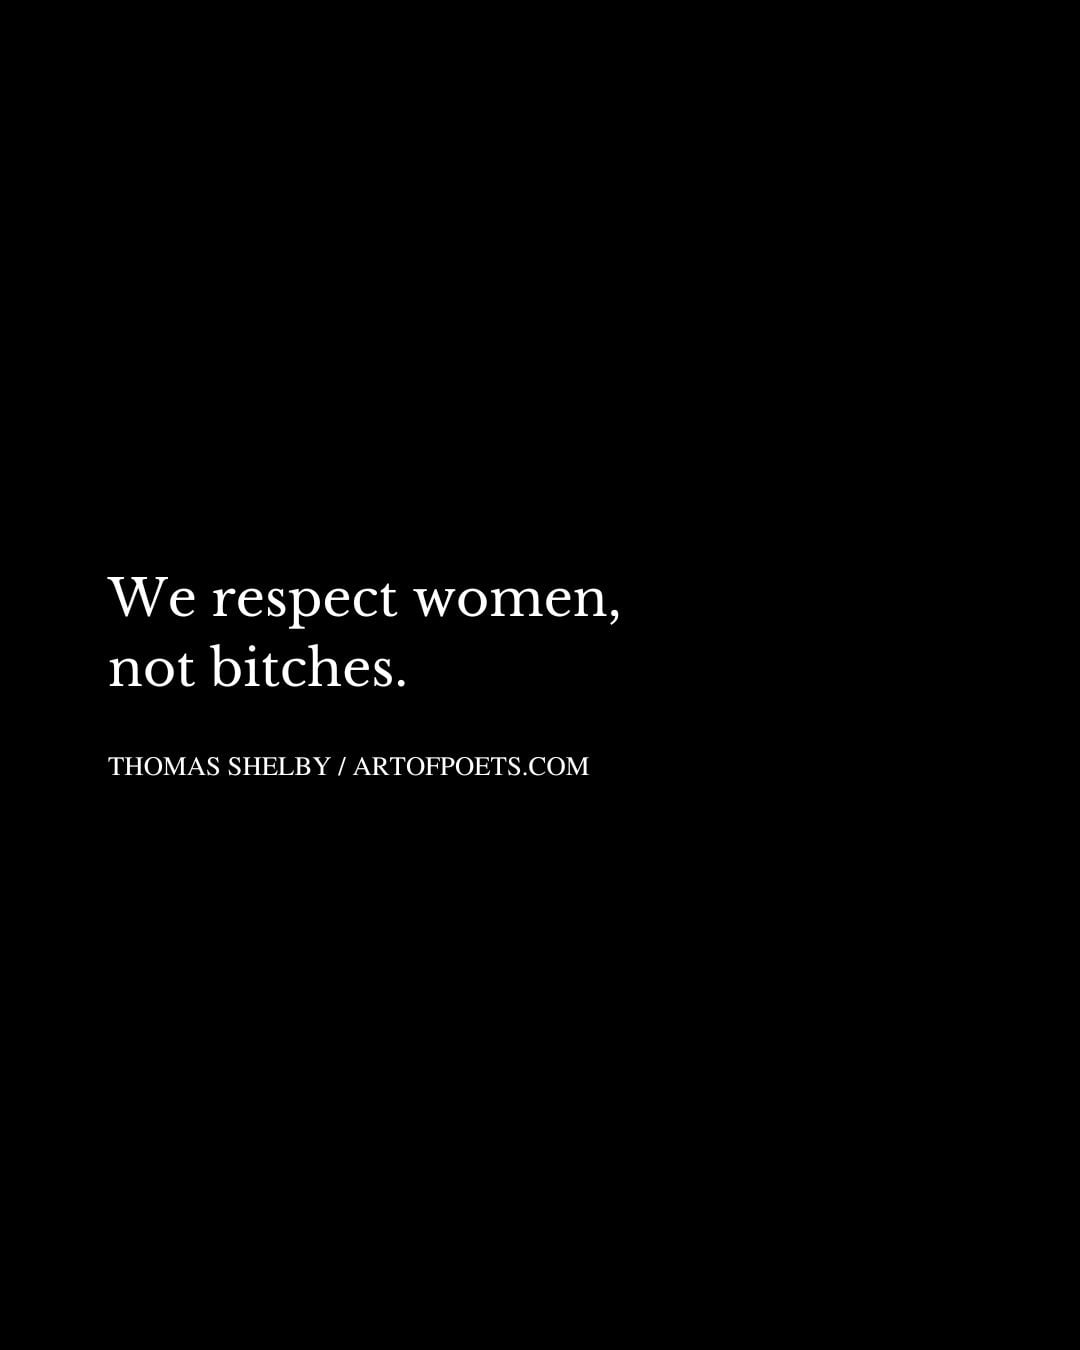 We respect women not bitches